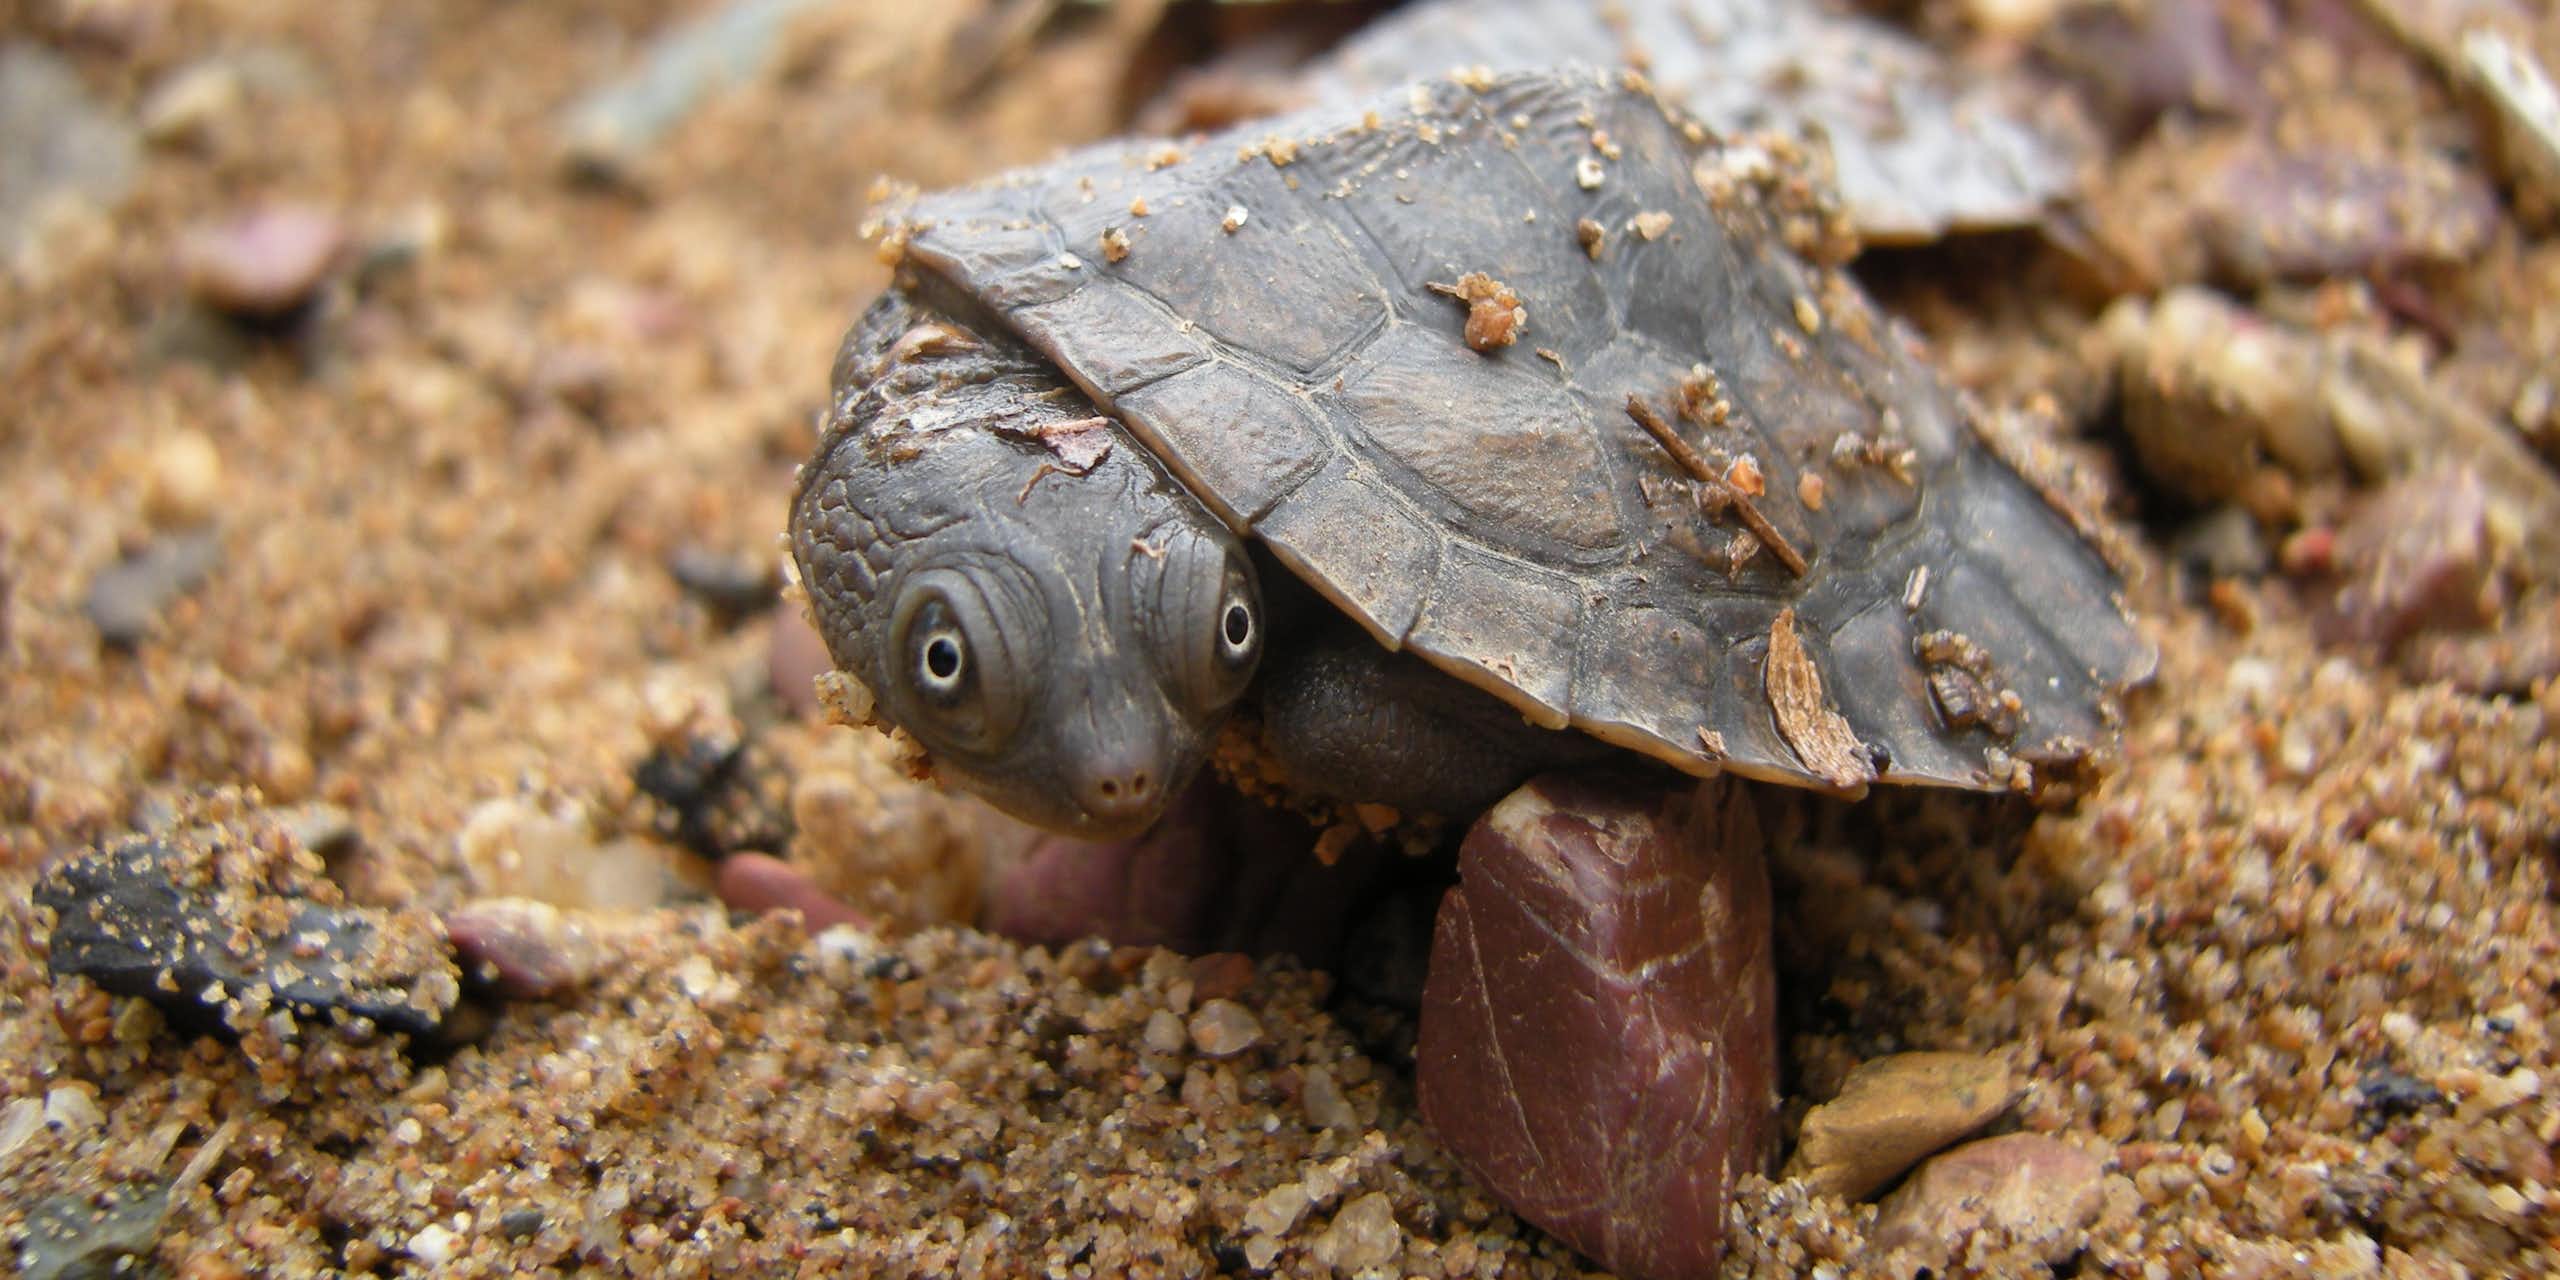 A turtle hatchling on sandy ground